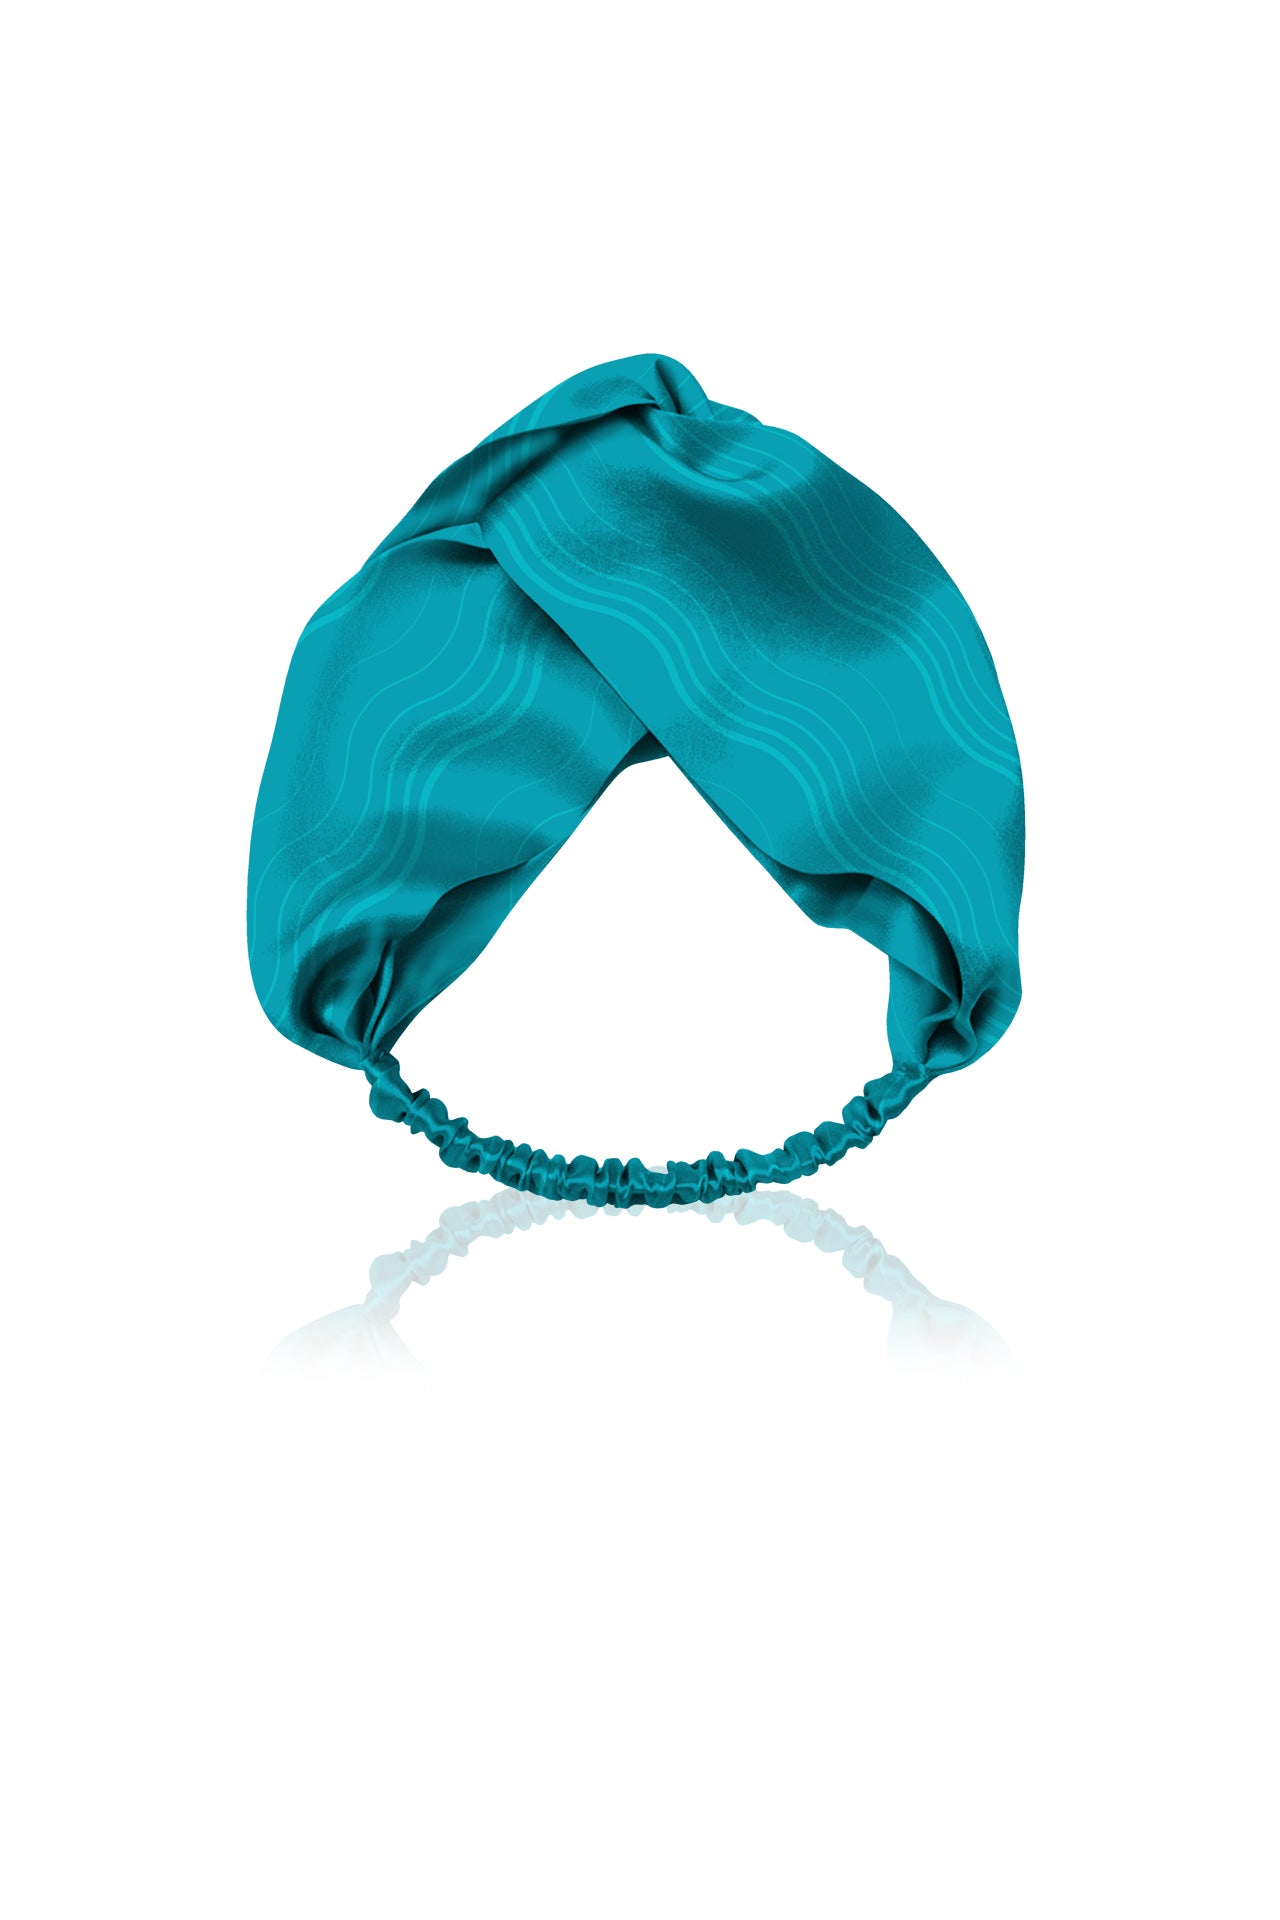 "Kyle X Shahida" "women's knotted headband" "head wrap for women" "elastic headbands for women" 